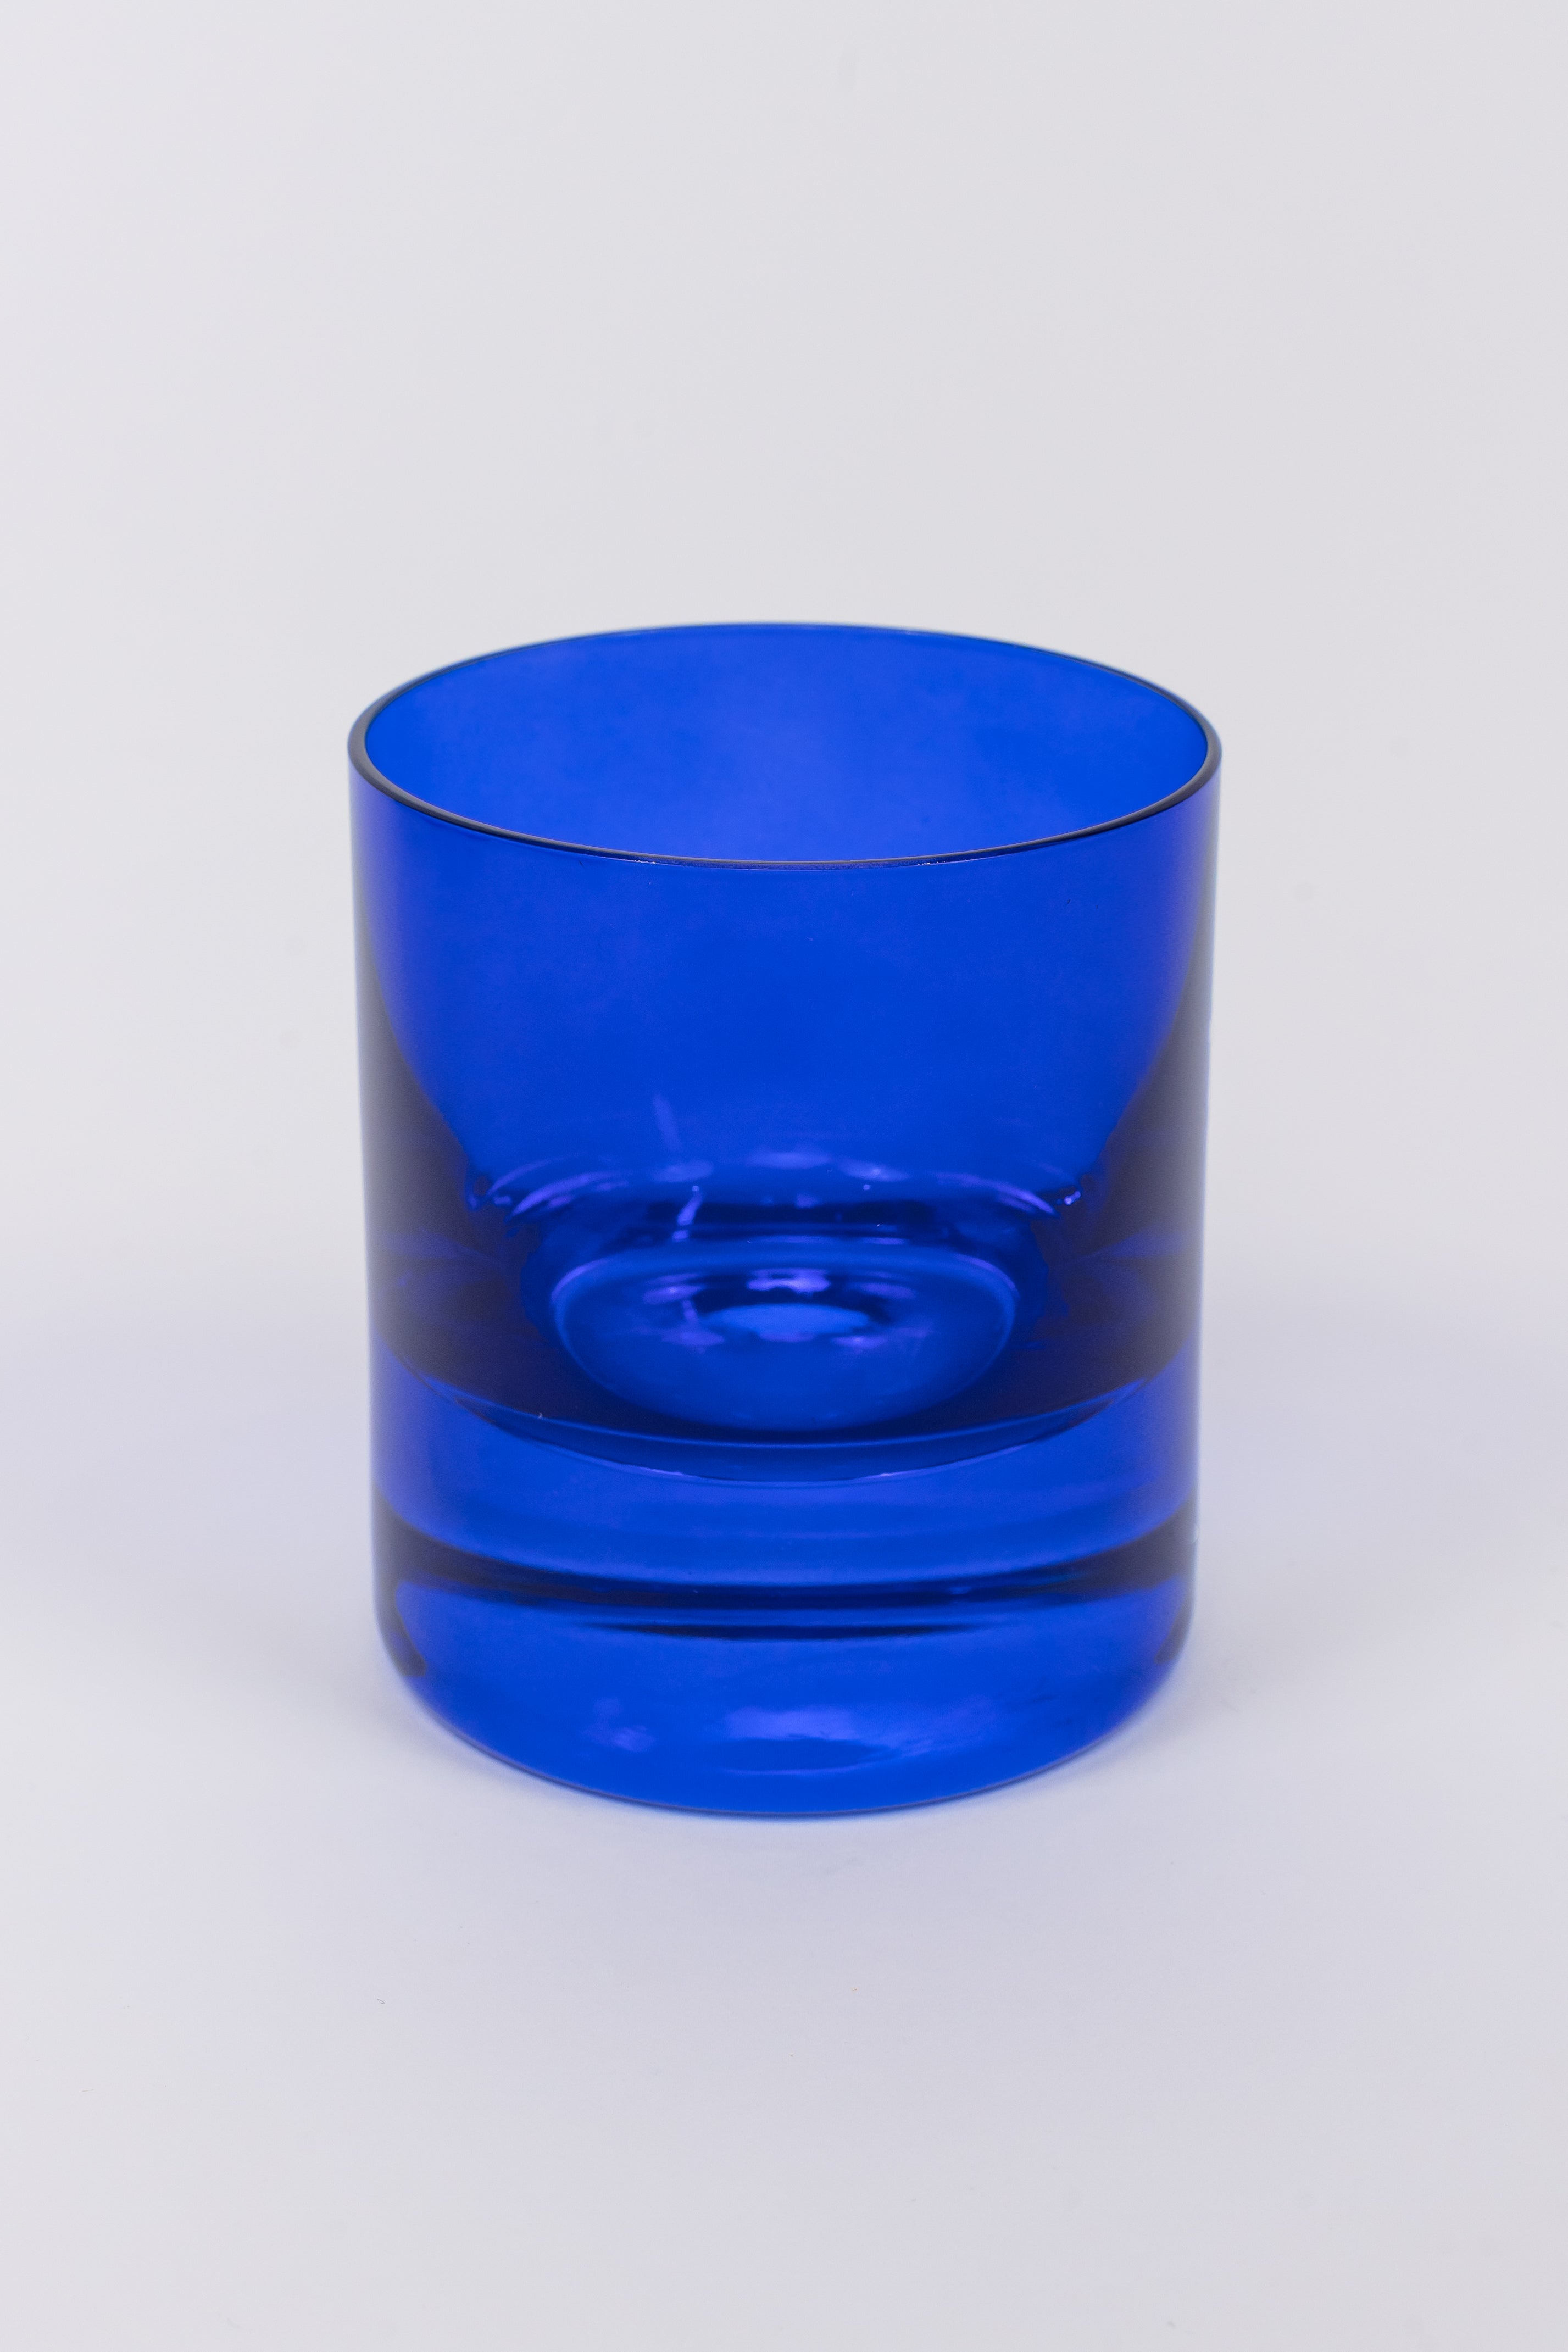 Estelle Colored Rocks Glass - Set of 2 {Royal Blue}